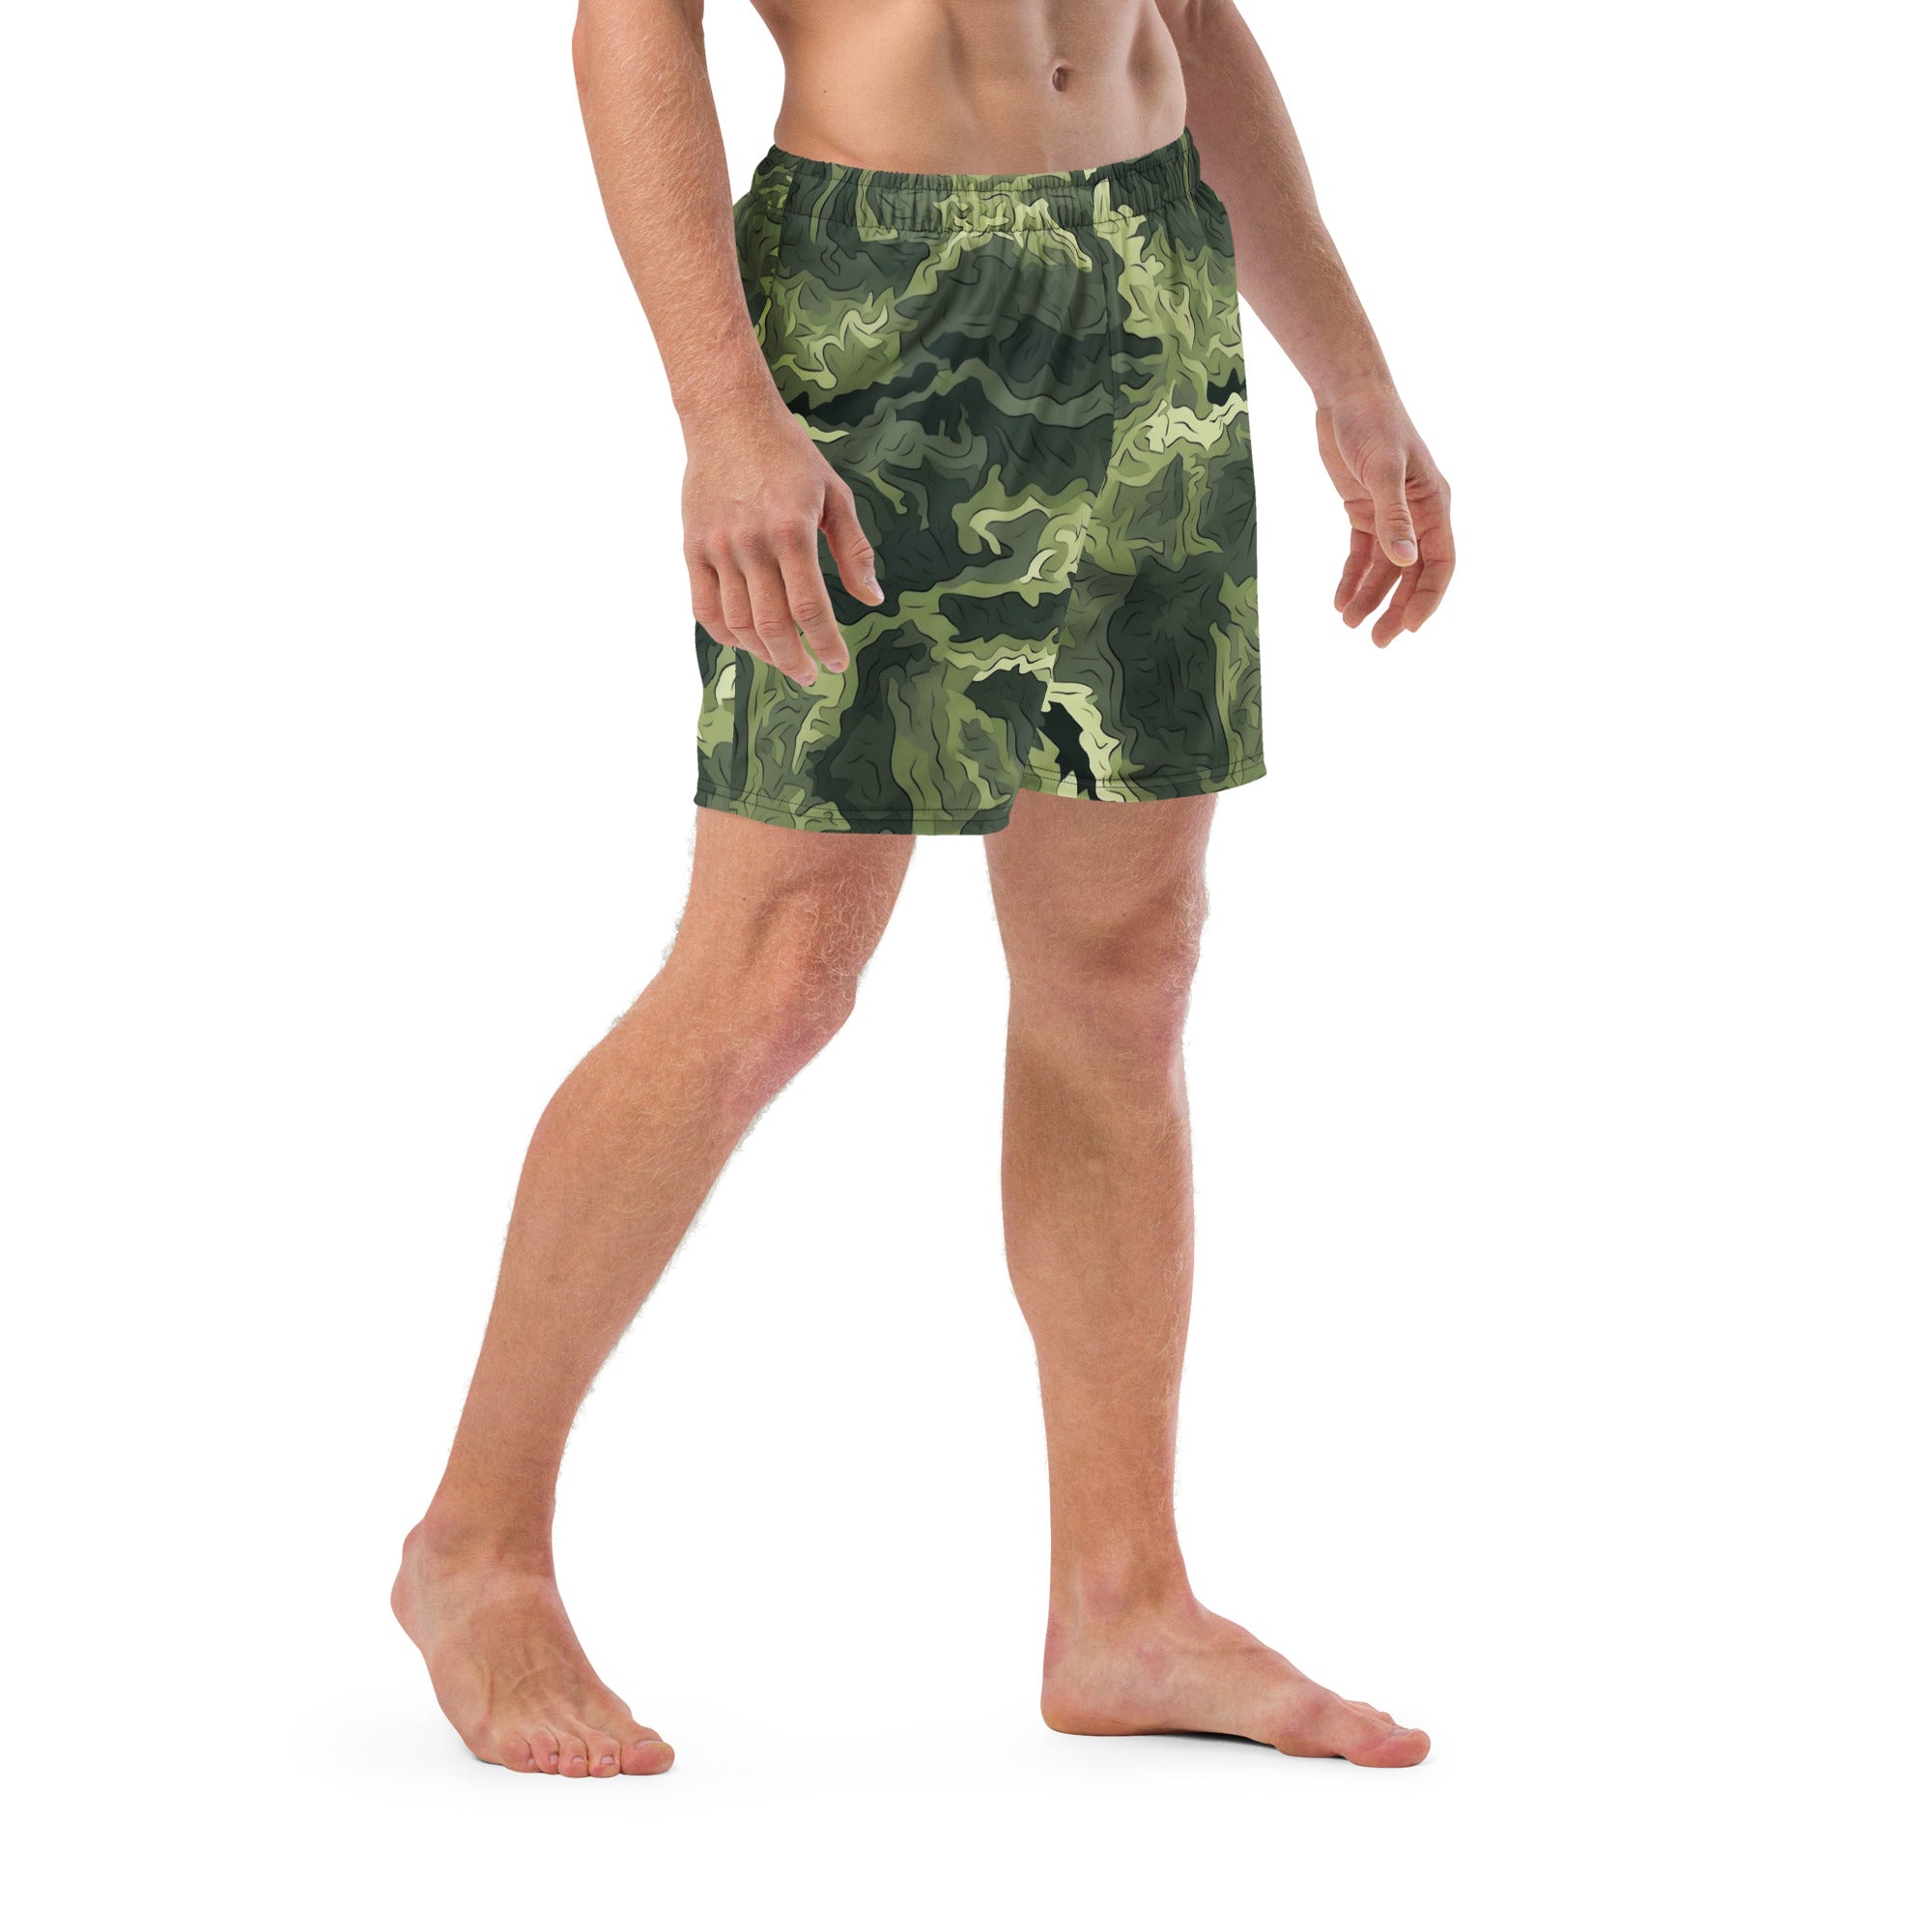 Mossy Grounds Organic Woodland Camouflage Pattern Men's Swim Trunks